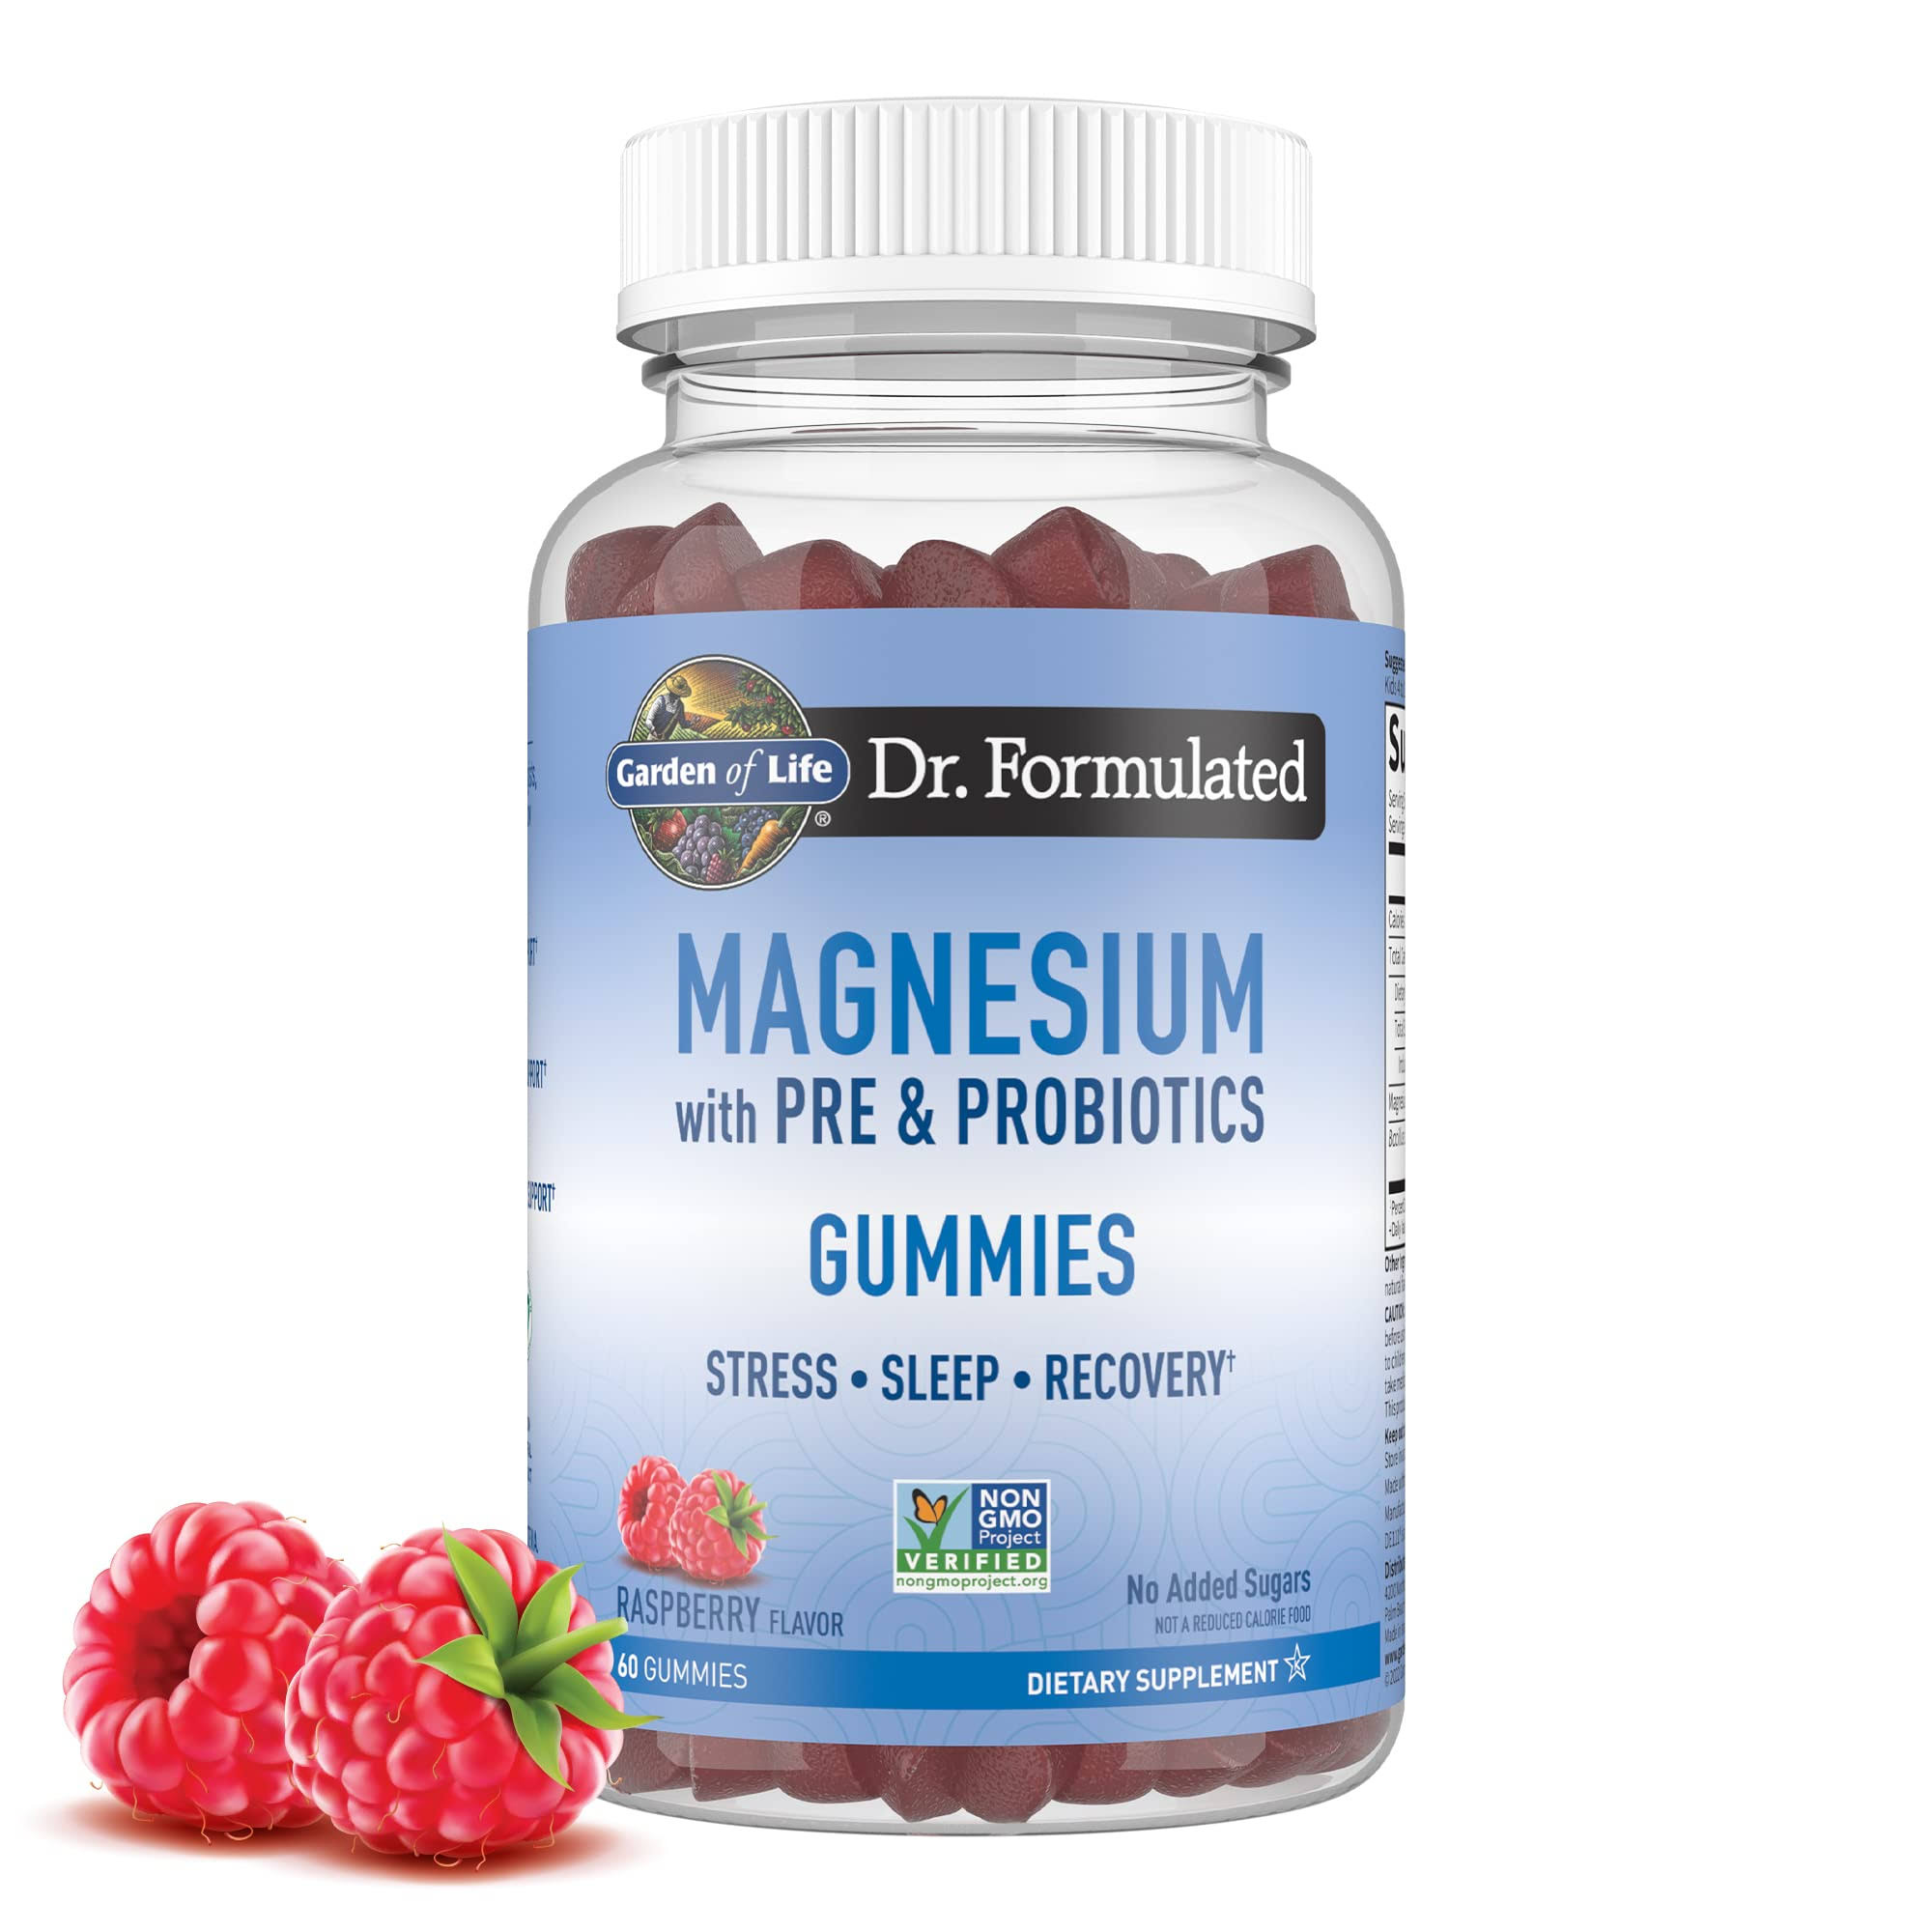 Garden of Life Dr. Formulated Magnesium with Pre & Probiotics Gummies, Raspberry - 60 Gummies